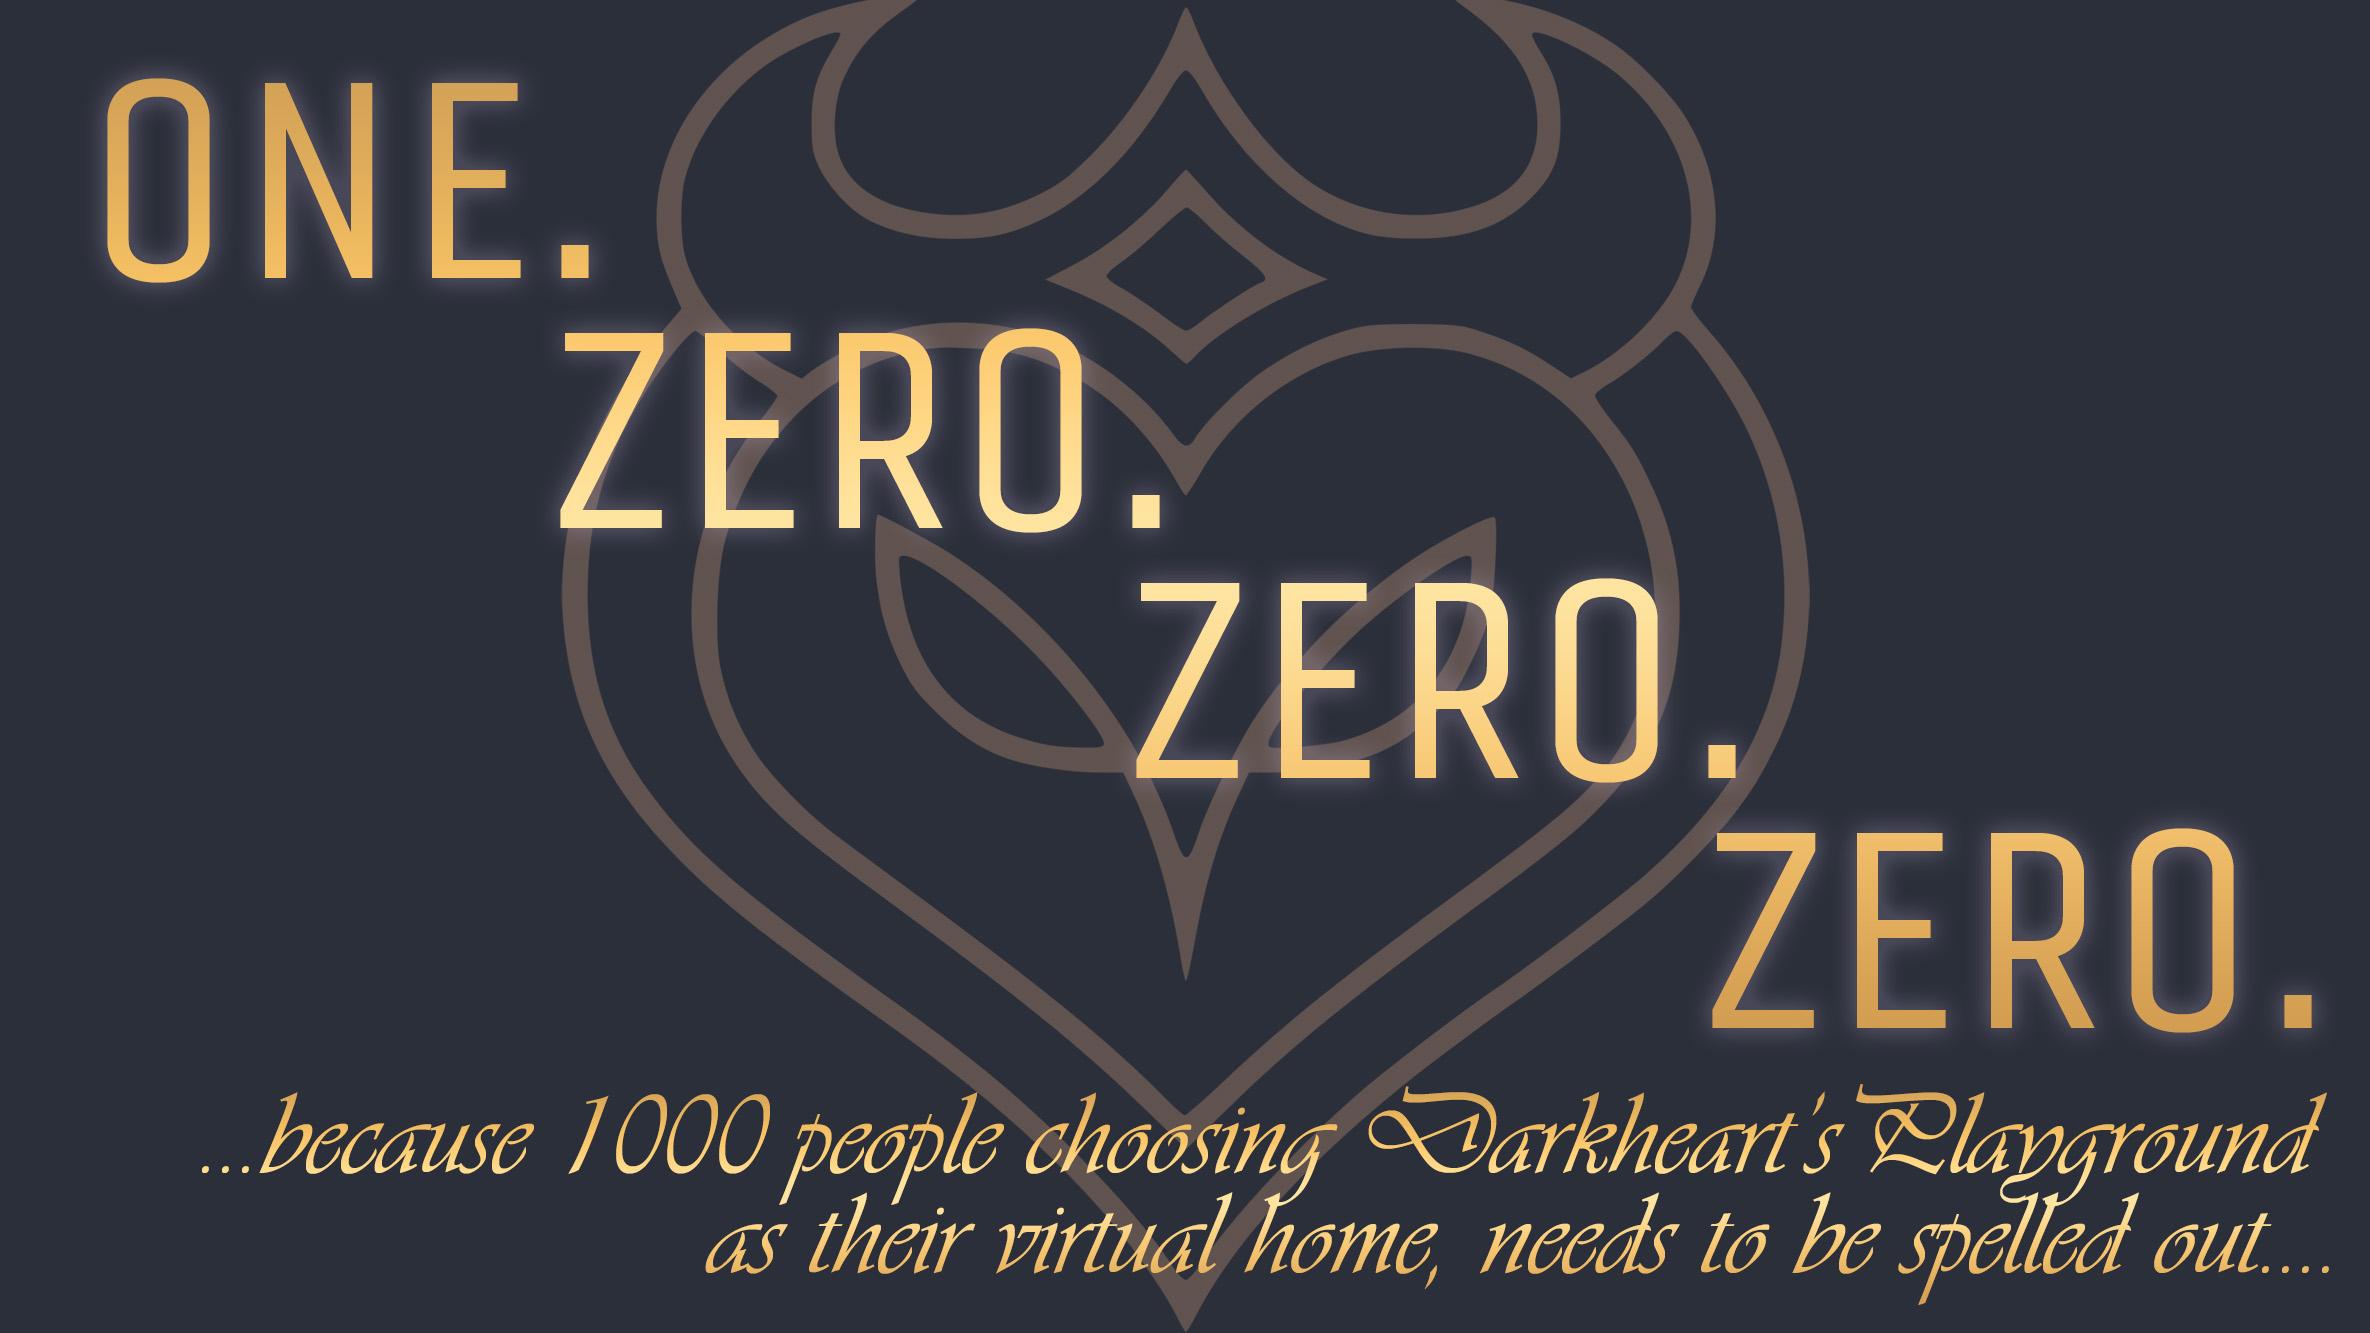 One.Zero.Zero.Zero: A Thousand Darkhearts